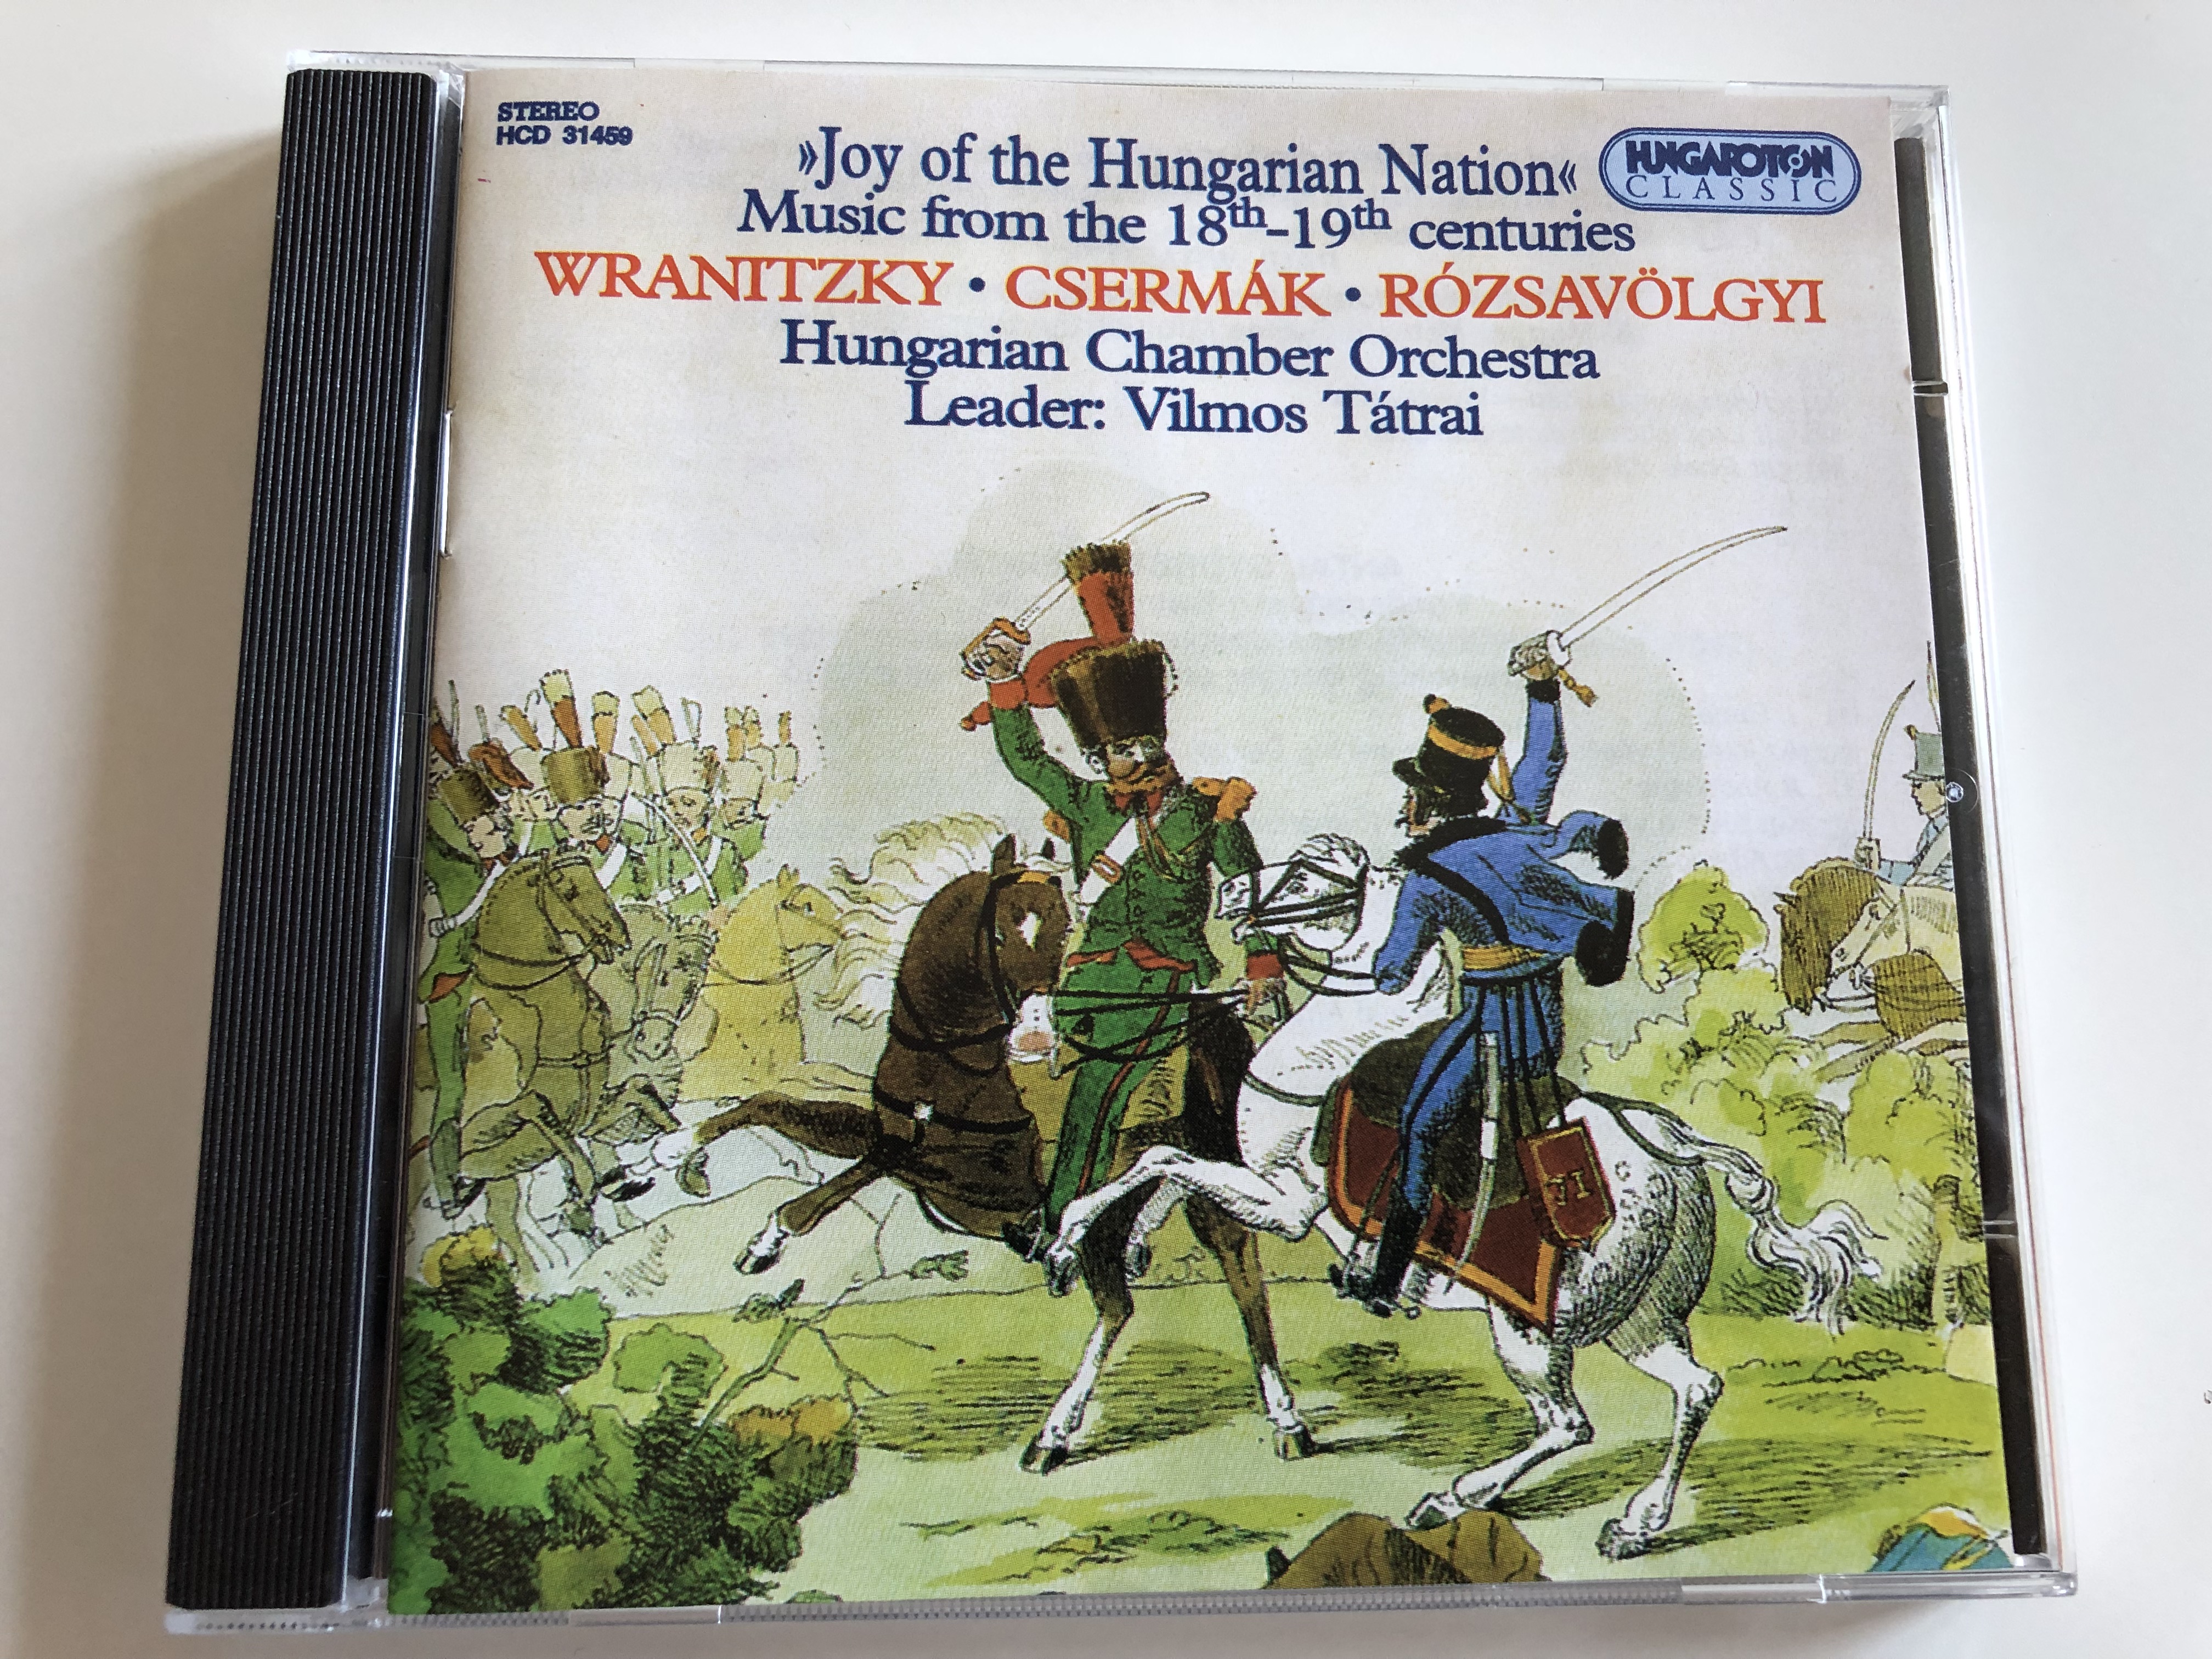 -joy-of-the-hungarian-nation-music-from-the-18th-19th-centuries-wranitzky-csermak-rozsavolgyi-hungarian-chamber-orchestra-leader-vilmos-tatrai-hungaroton-classic-audio-cd-1995-stereo-1-.jpg